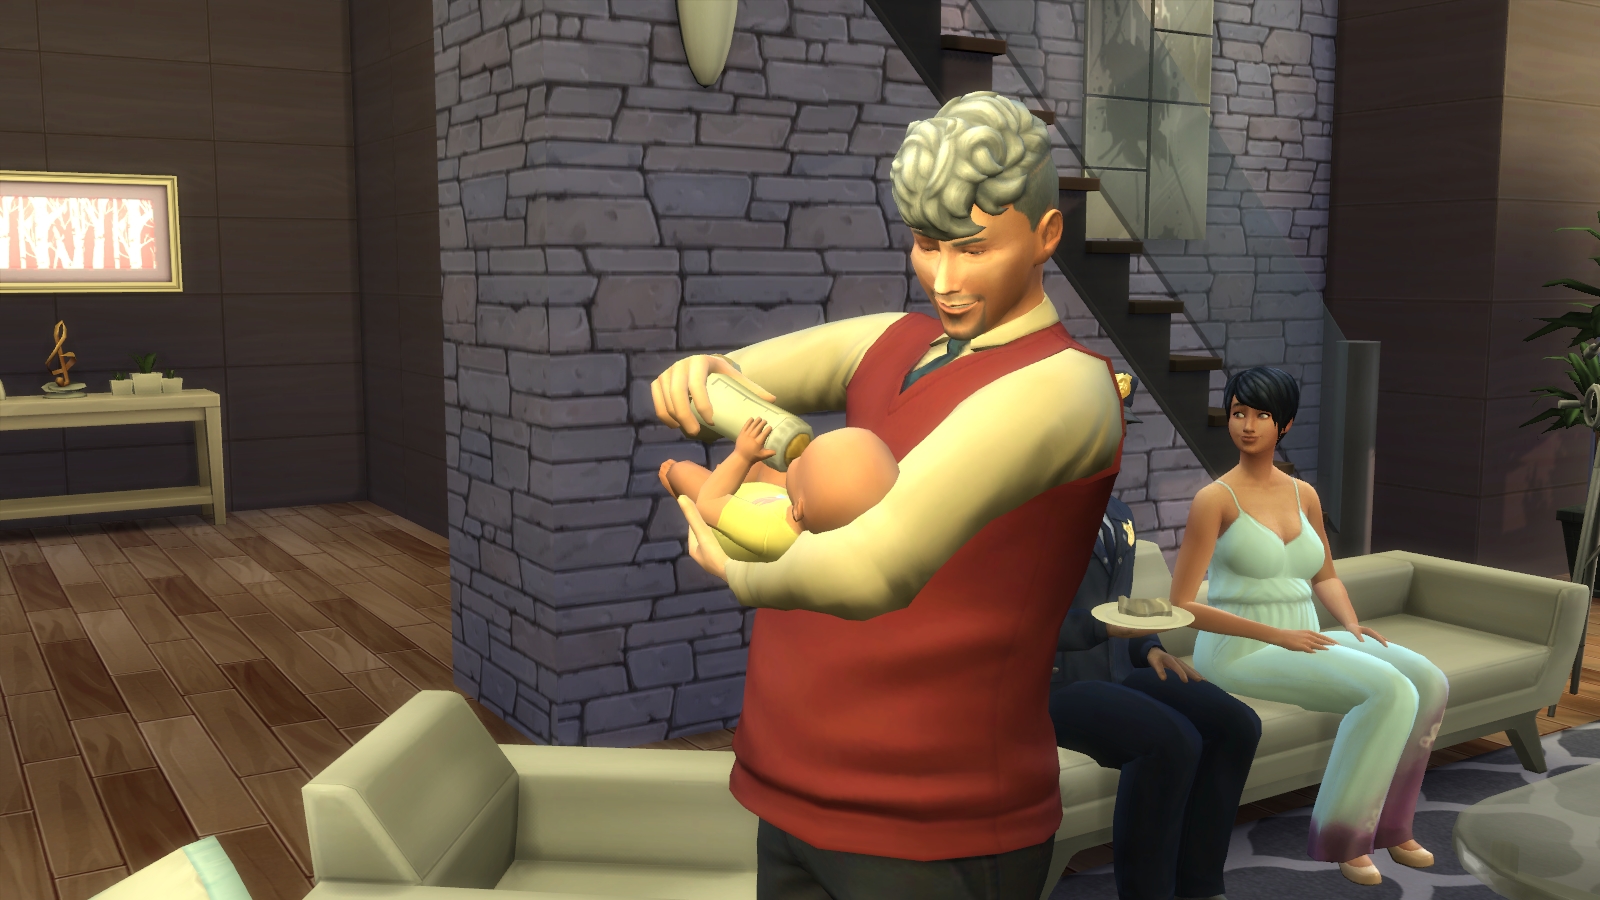 Nøgle Sløset Pensioneret Sims 4 Adds The Nanny – simcitizens